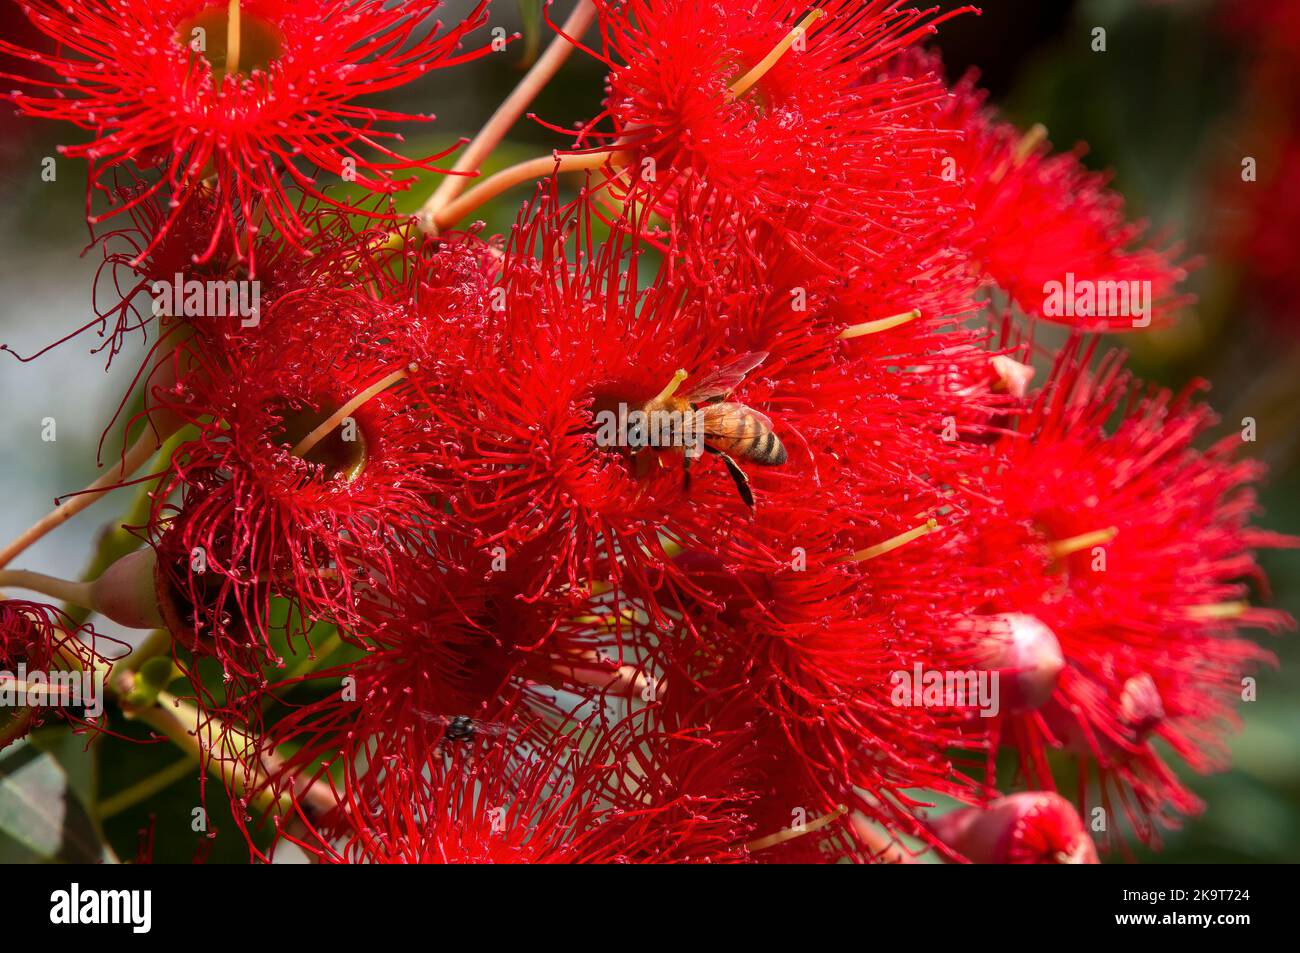 Sydney Australia, bee hovering in red flowers of an Australian native flowering gum tree Stock Photo